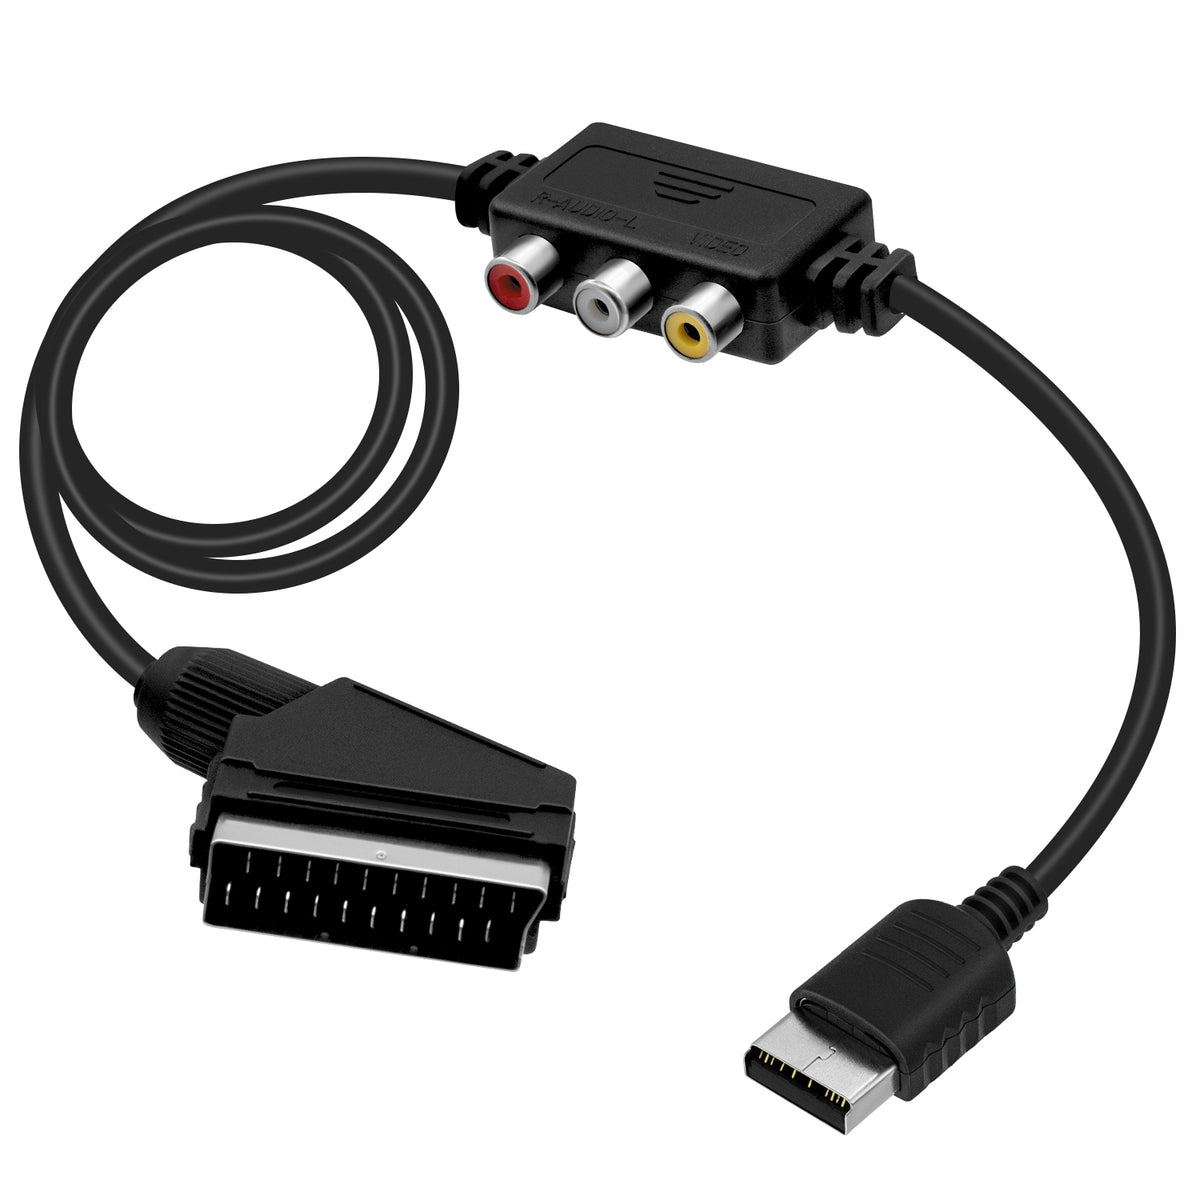 Mutton udgifterne molester RGB Scart Cable With AV Adapter for SEGA Dreamcast – SupremeGameGear